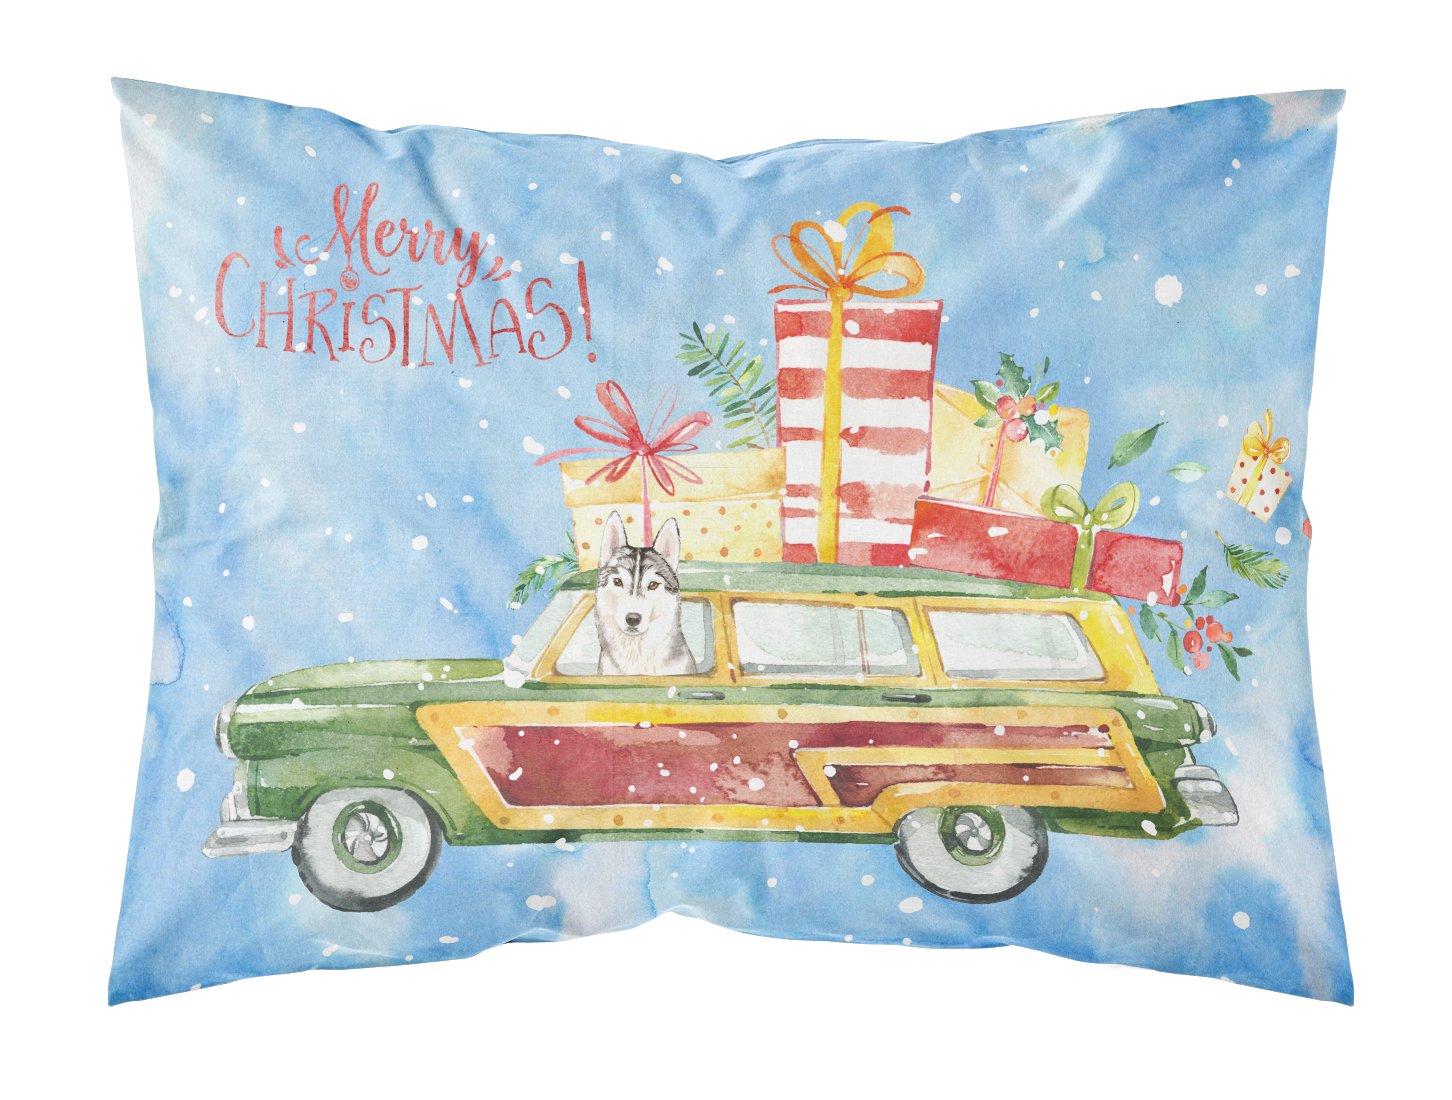 Merry Christmas Siberian Husky Fabric Standard Pillowcase CK2424PILLOWCASE by Caroline's Treasures